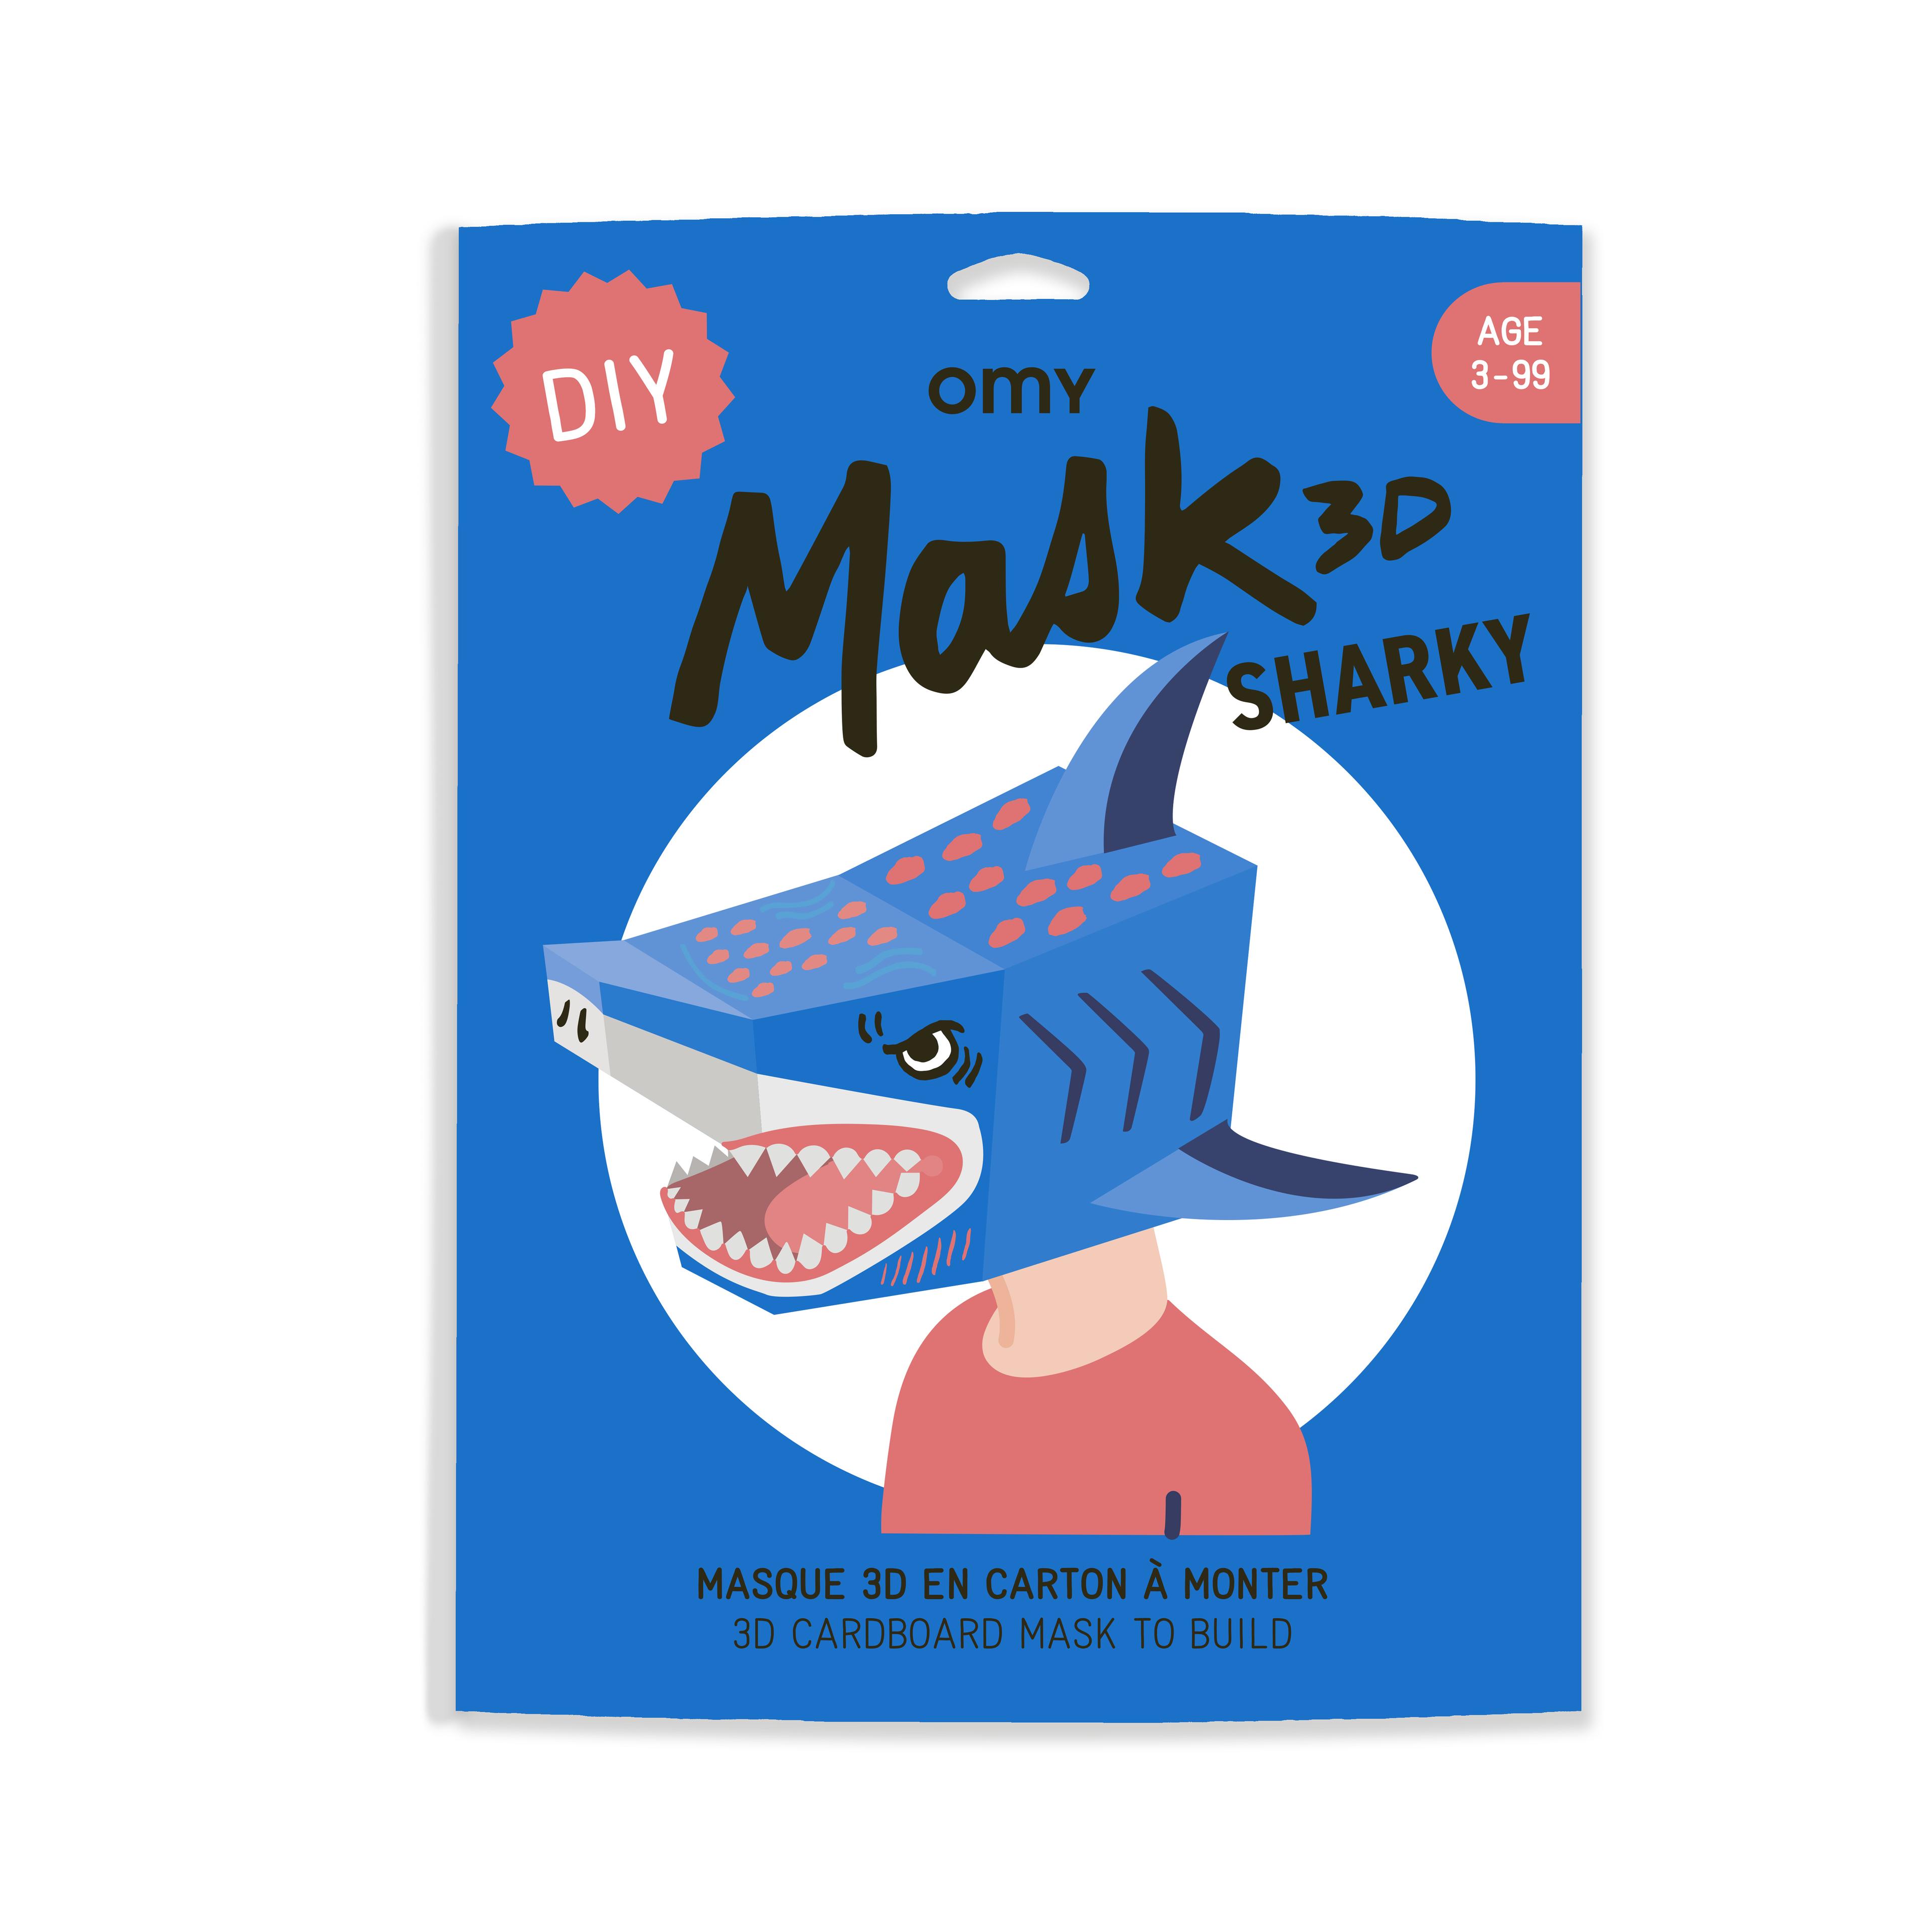 3D MASK - SHARKY